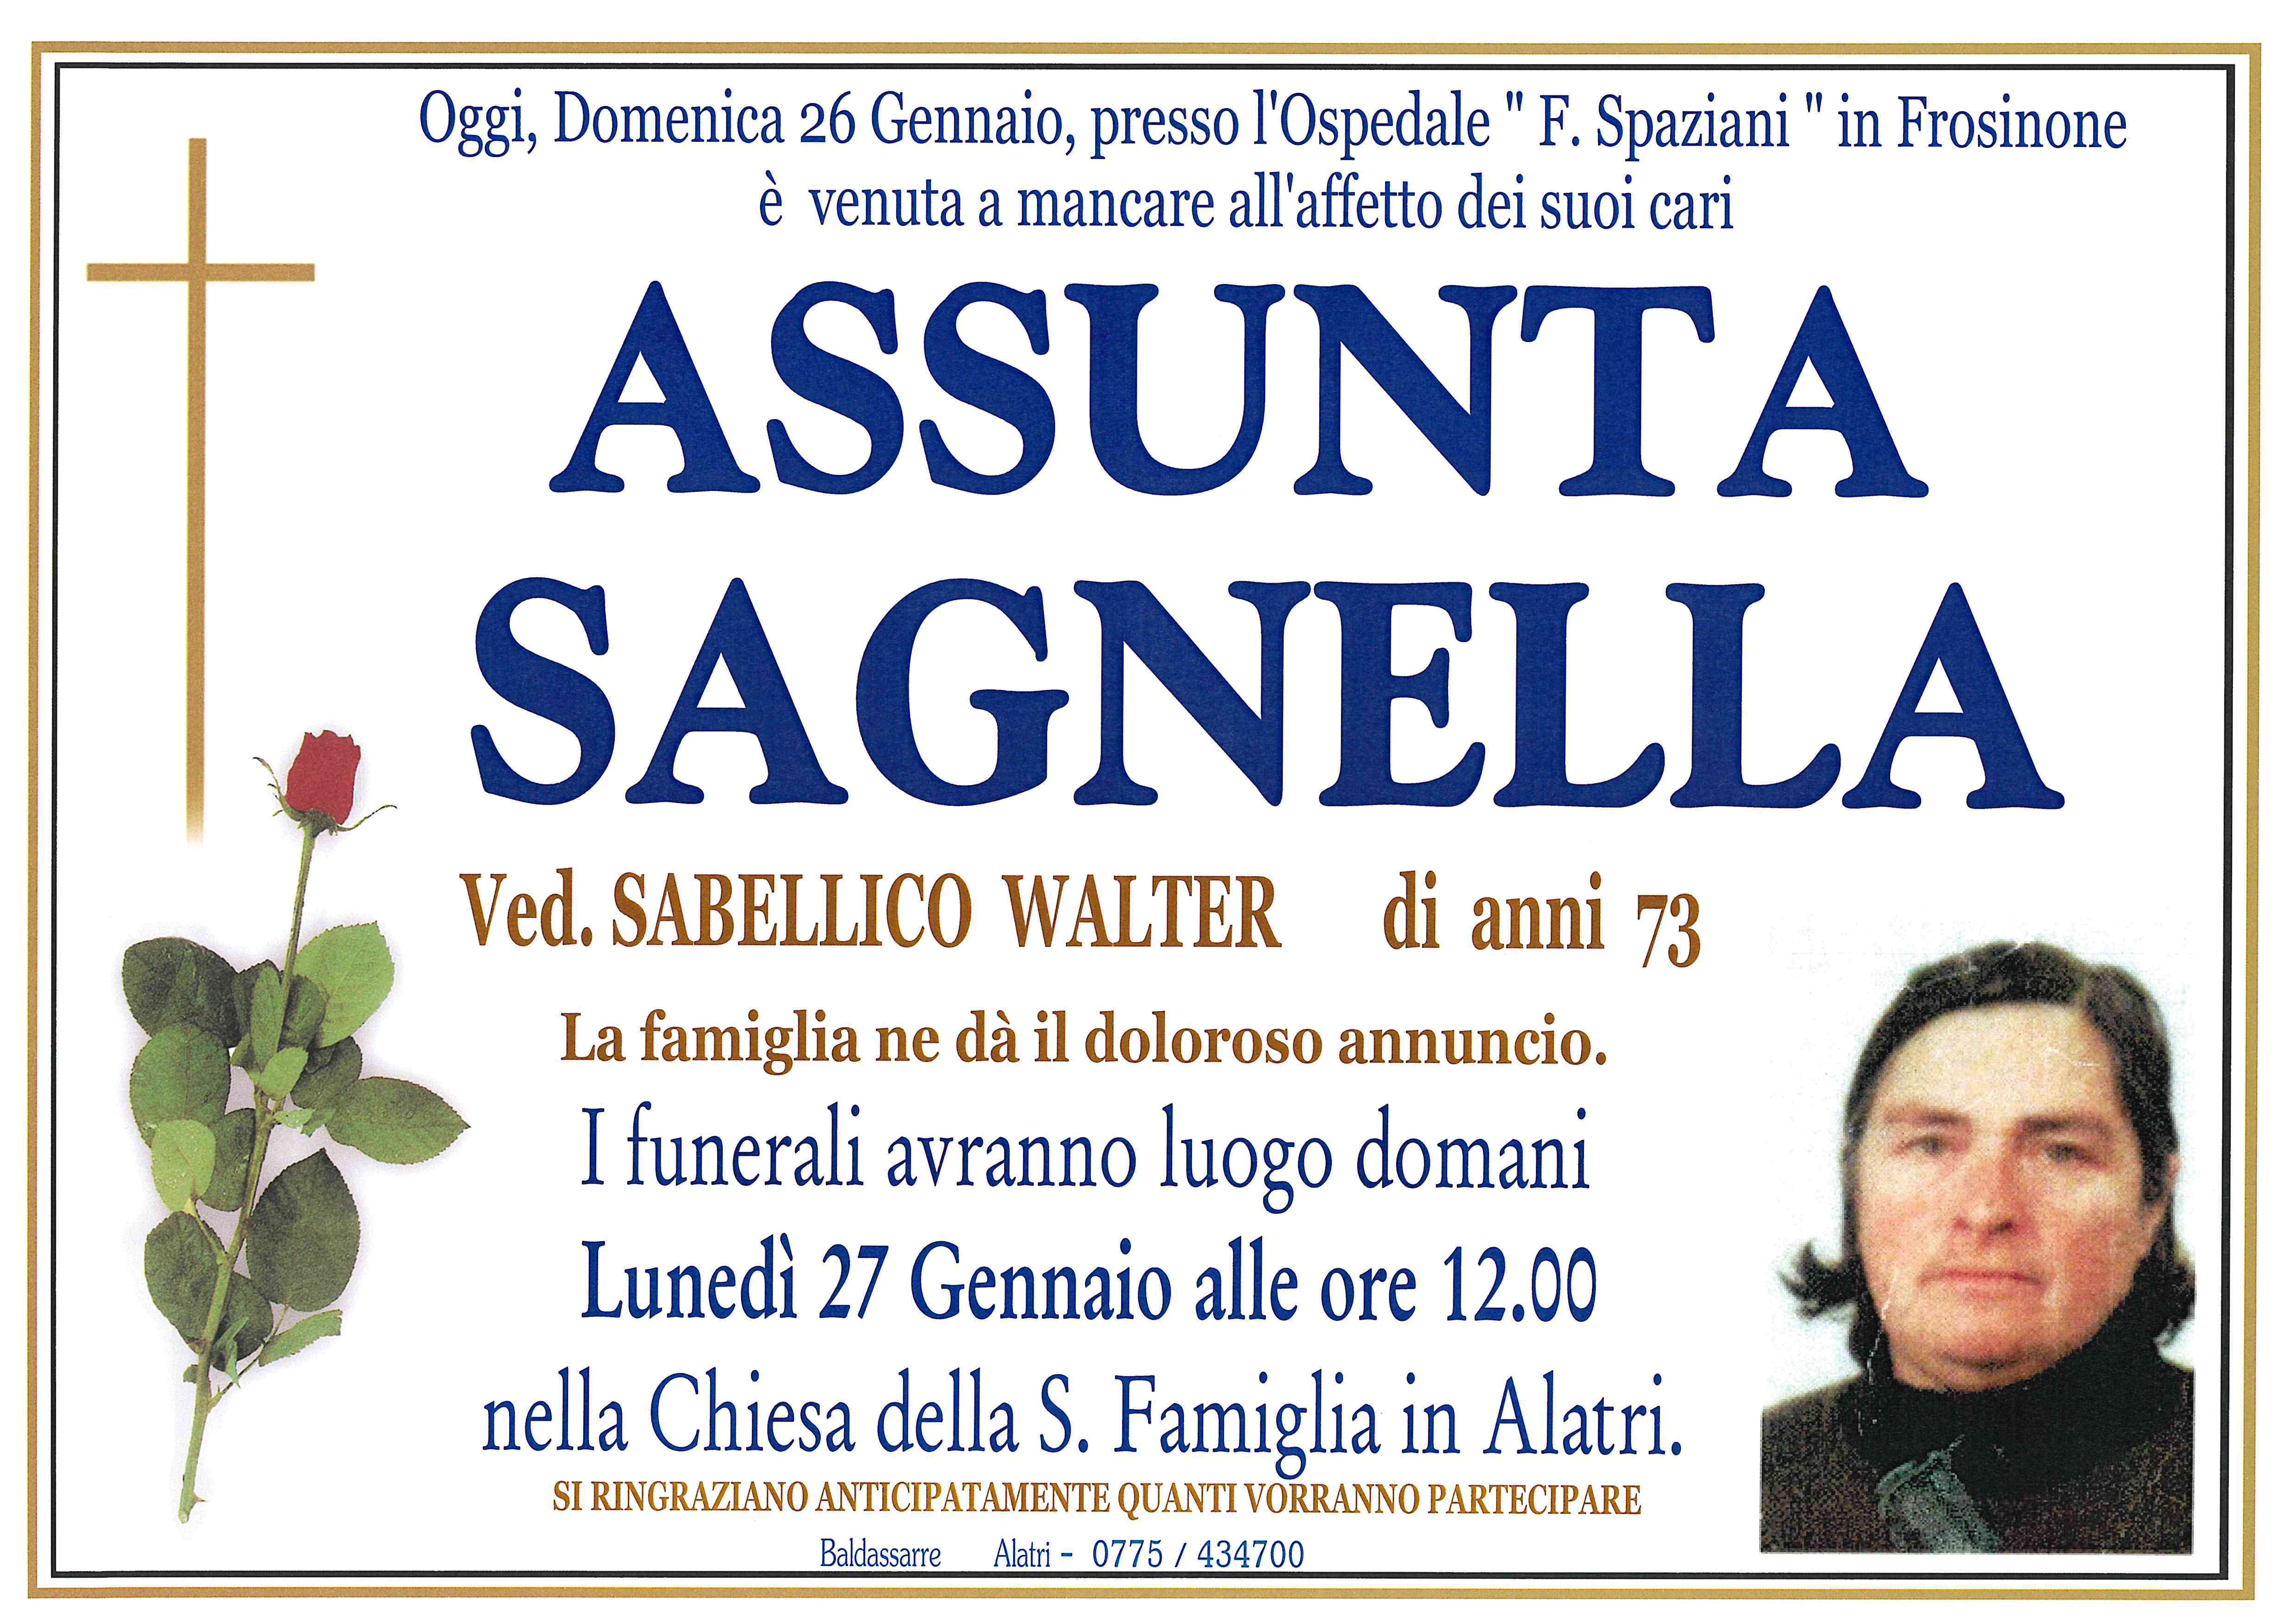 Assunta Sagnella